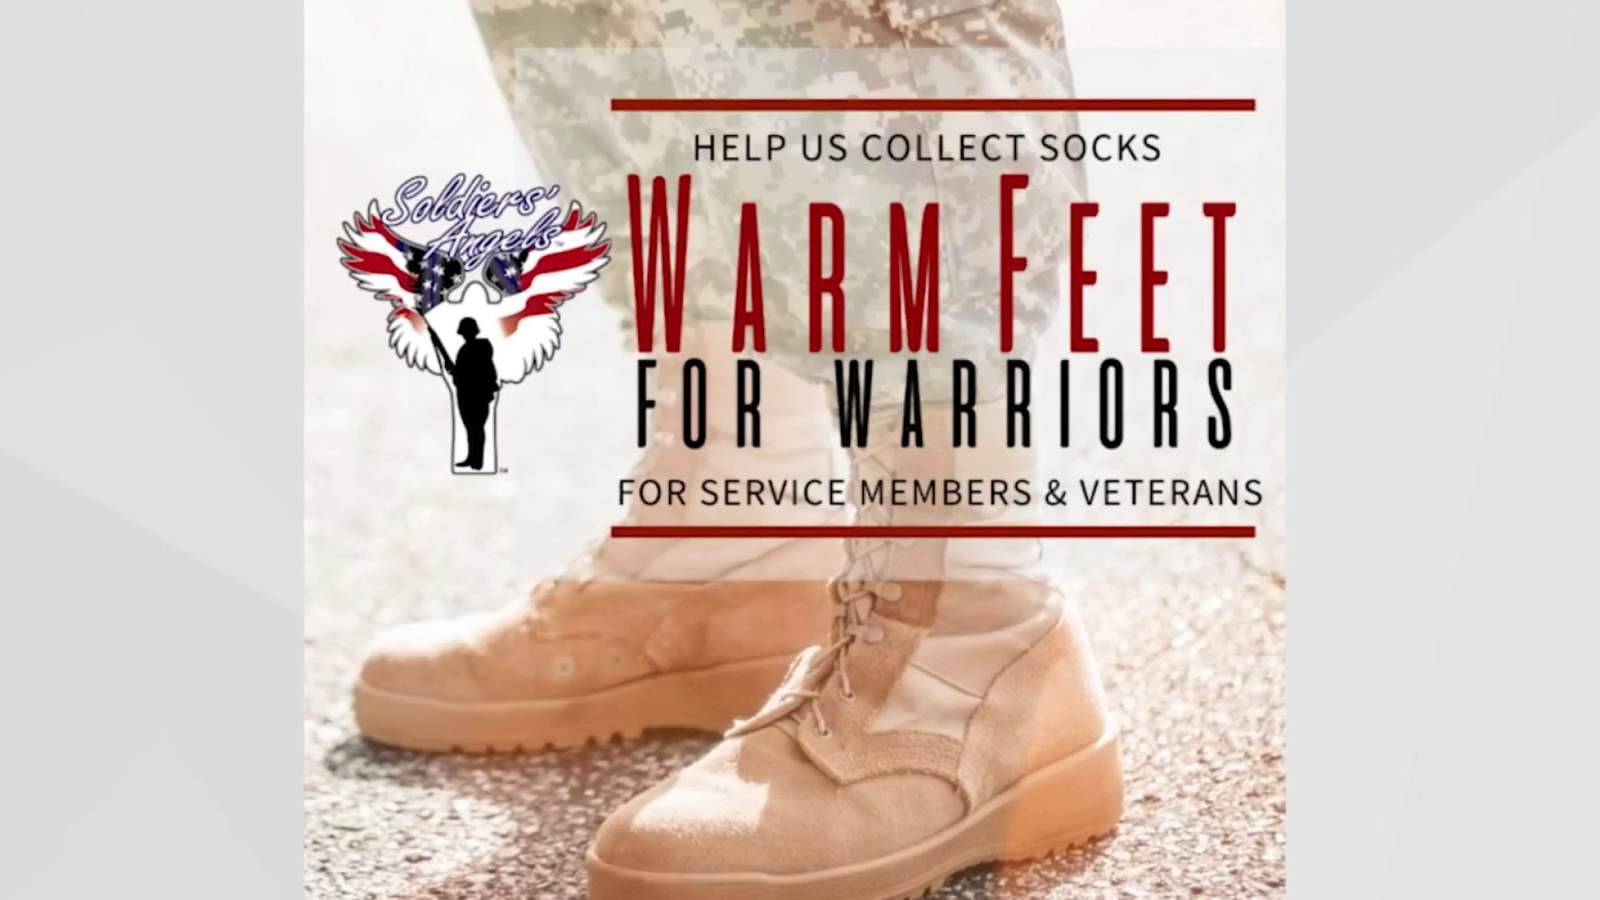 KSAT Community spotlight: Help Soldiers’ Angels collect 10,000 pairs of socks for service members, veterans